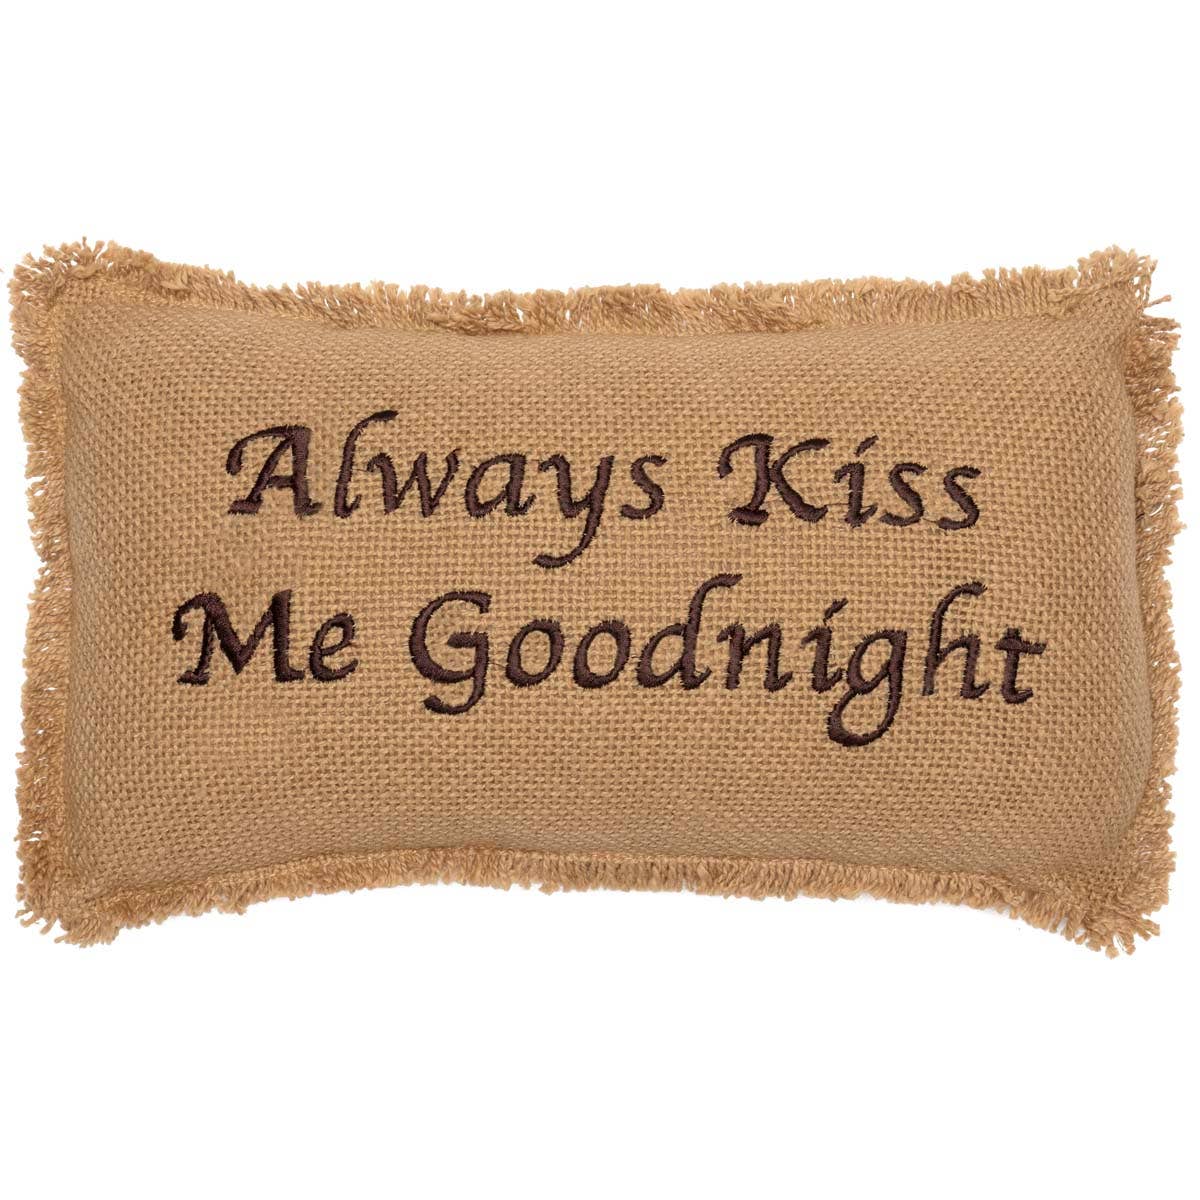 Always Kiss Me Goodnight 7x13 Burlap Throw Pillow